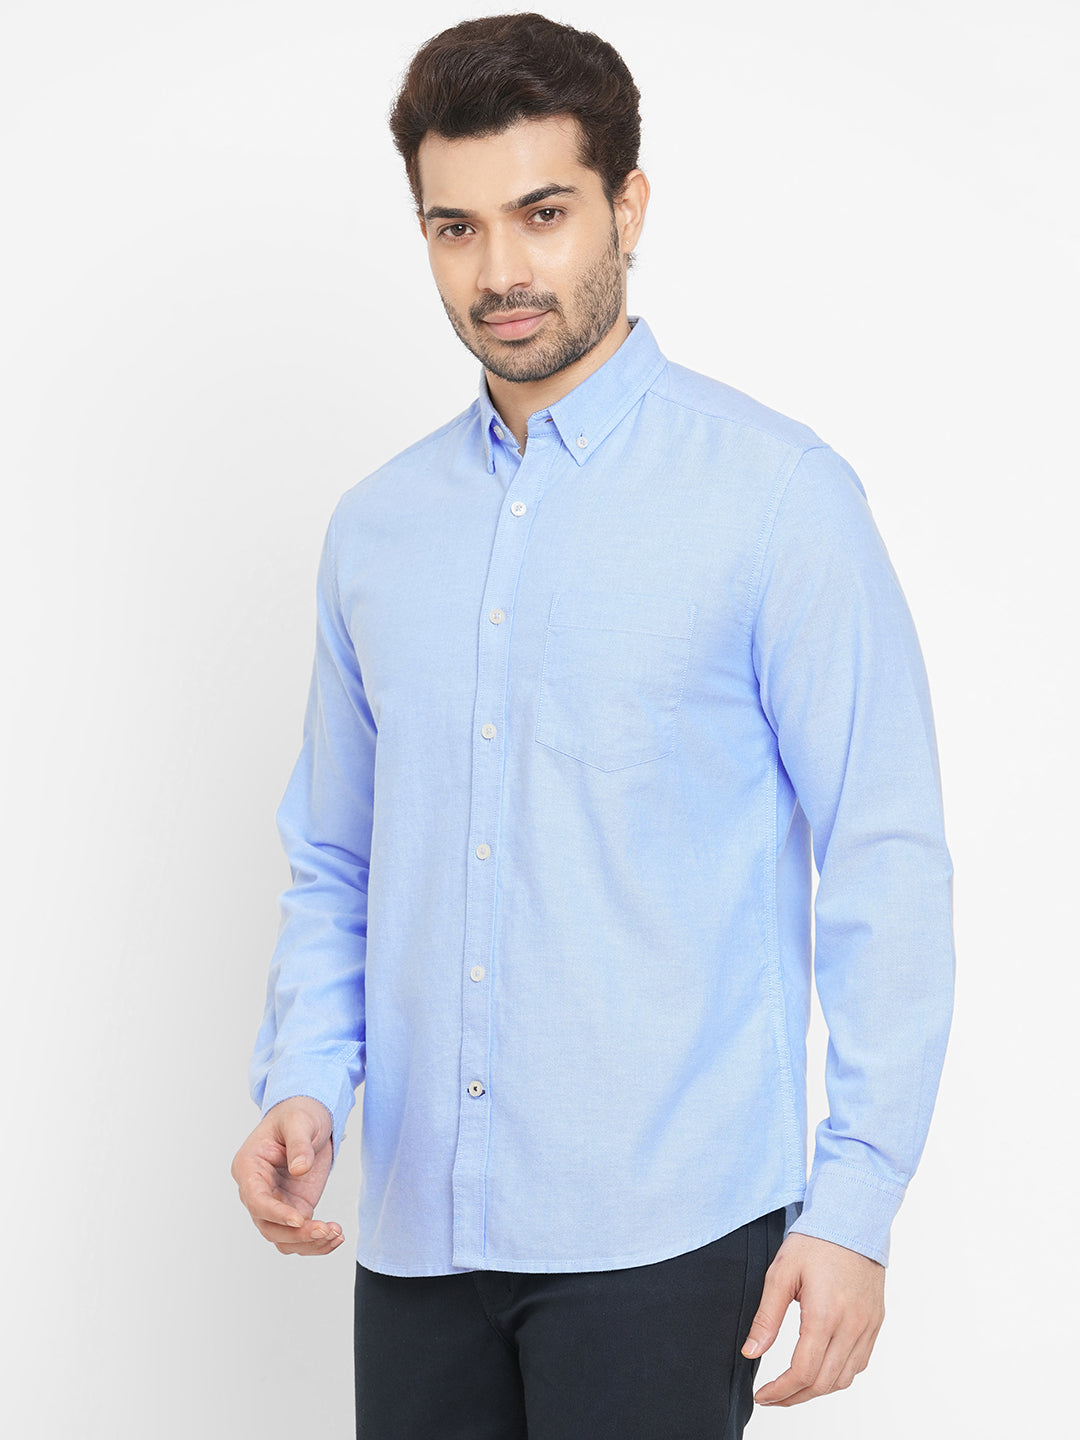 Men's Oxford Cotton Button down Collar Long Sleeved Shirt - Blue